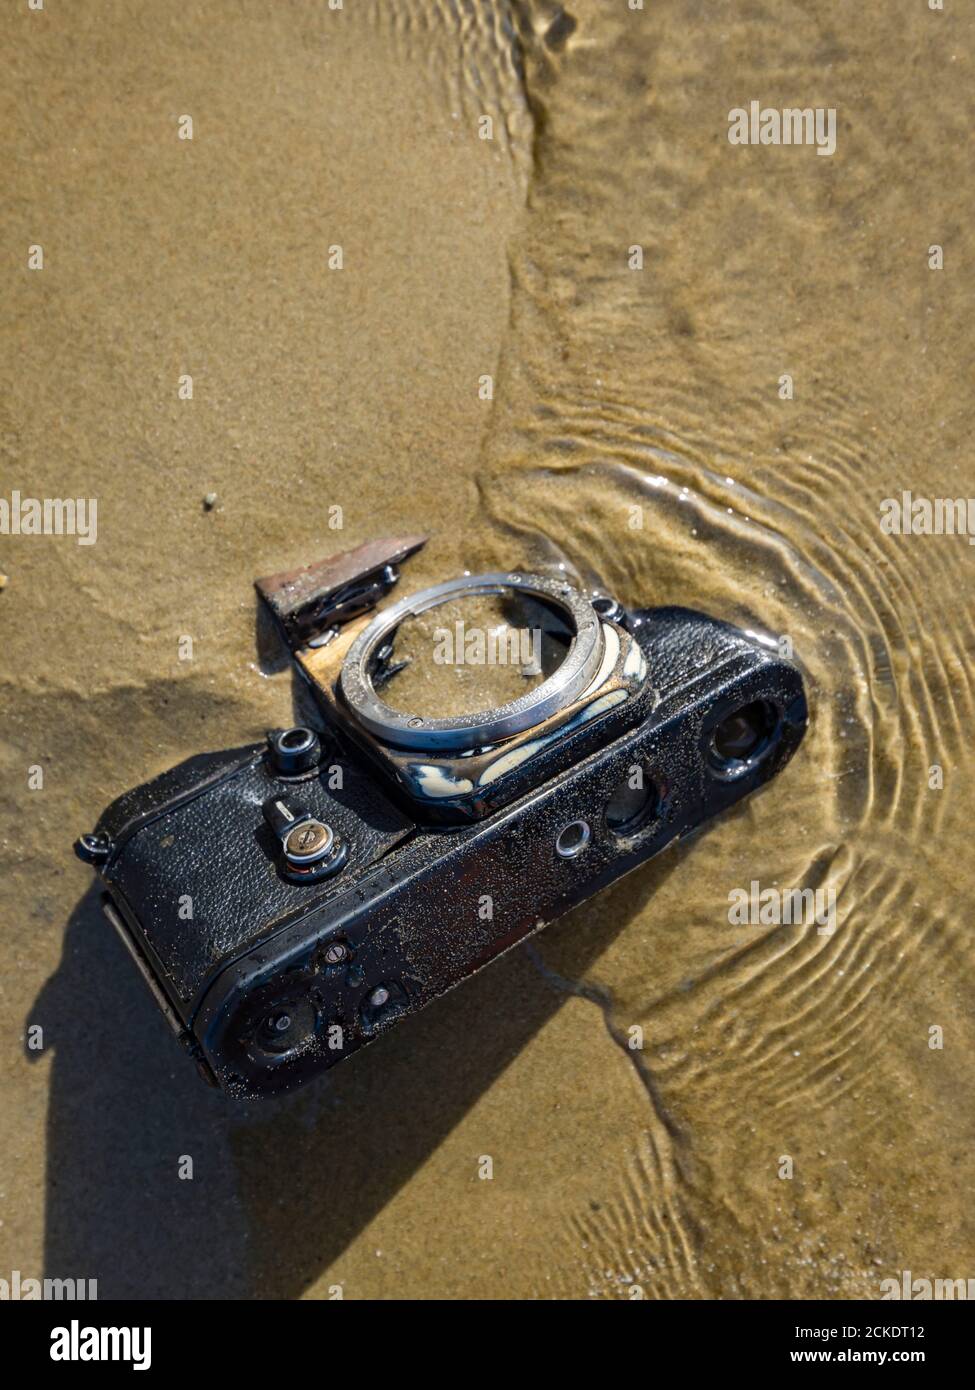 Nikon retro classic SLR film camera body on beach sun bright reflection small ripples rippled sea water surface Stock Photo